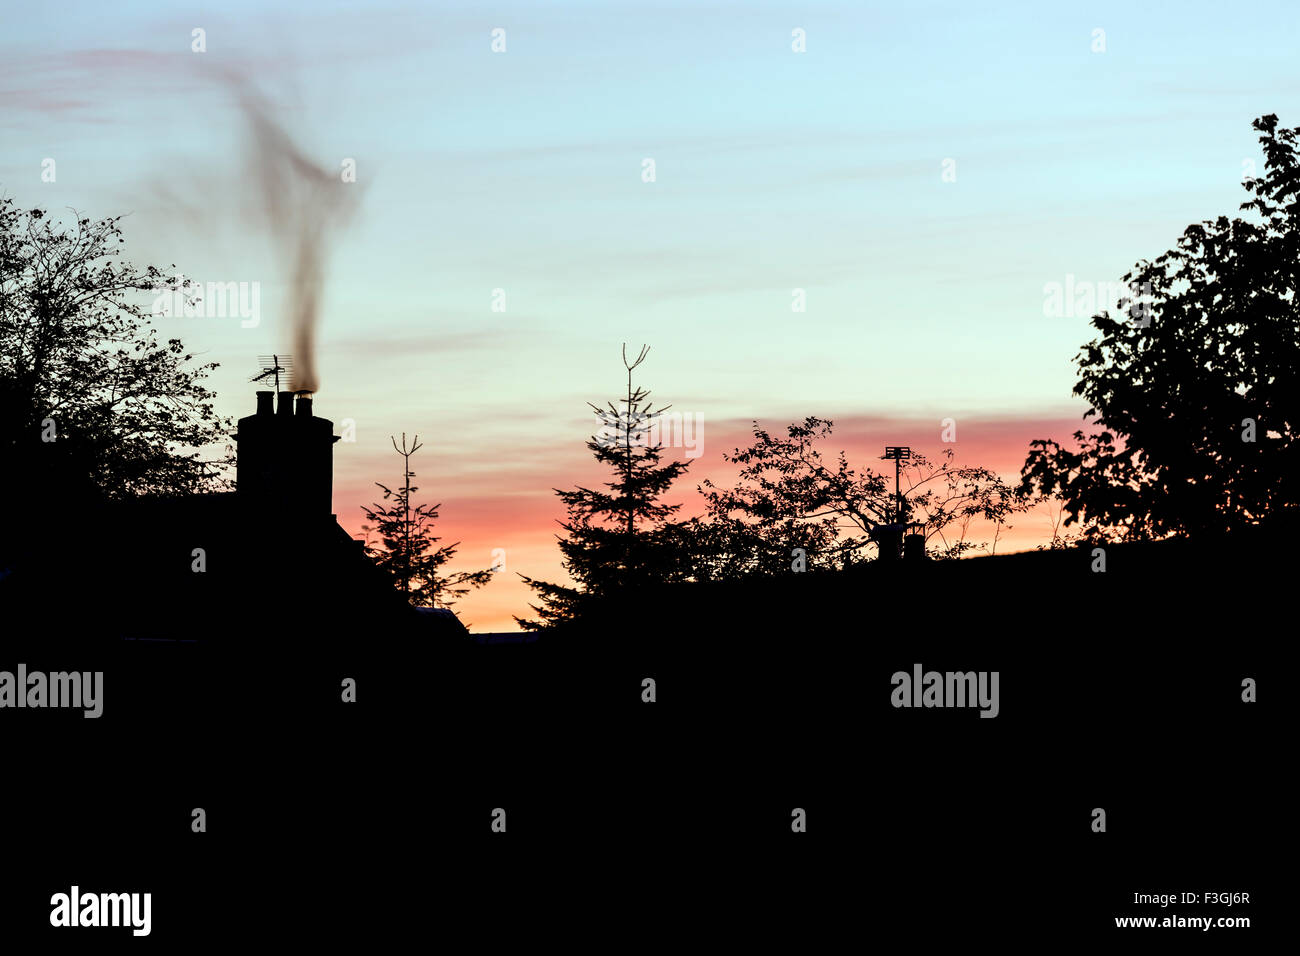 Smoke rising from a house chimney at sunset, UK Stock Photo